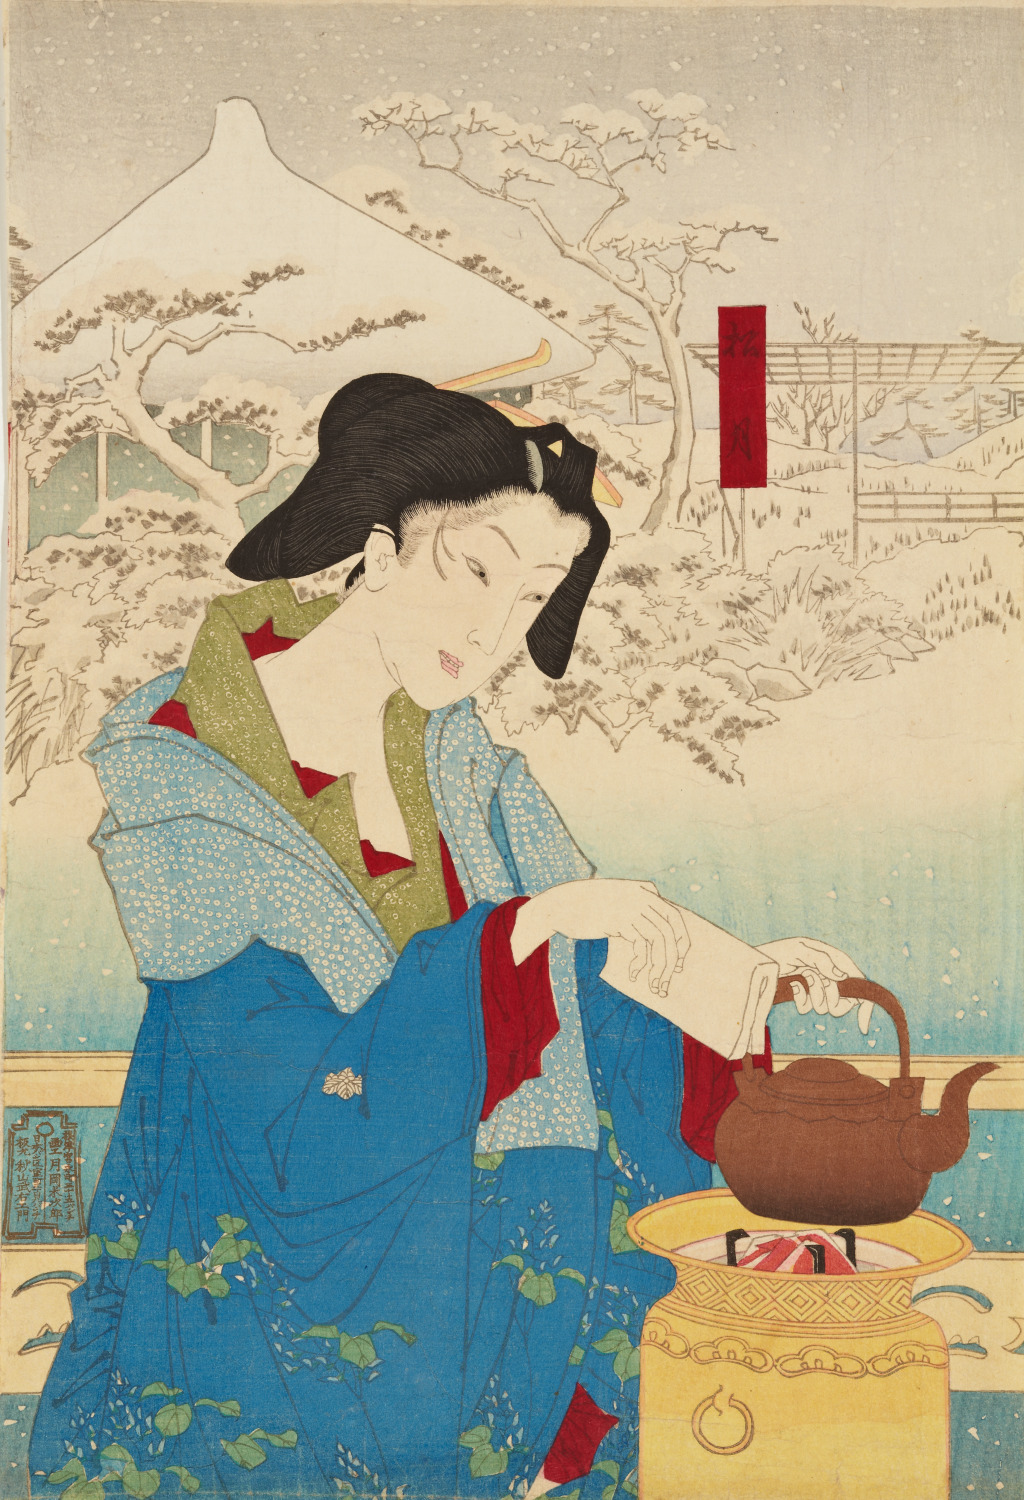 Tsukioka Yoshitoshi, Winter Daishoro Brothel in Nezu, from the series The Four Seasons at Their Height, 1883. Woodblock print. Gift of Susan Julia Ross and Dr. Gary L. Waddington.